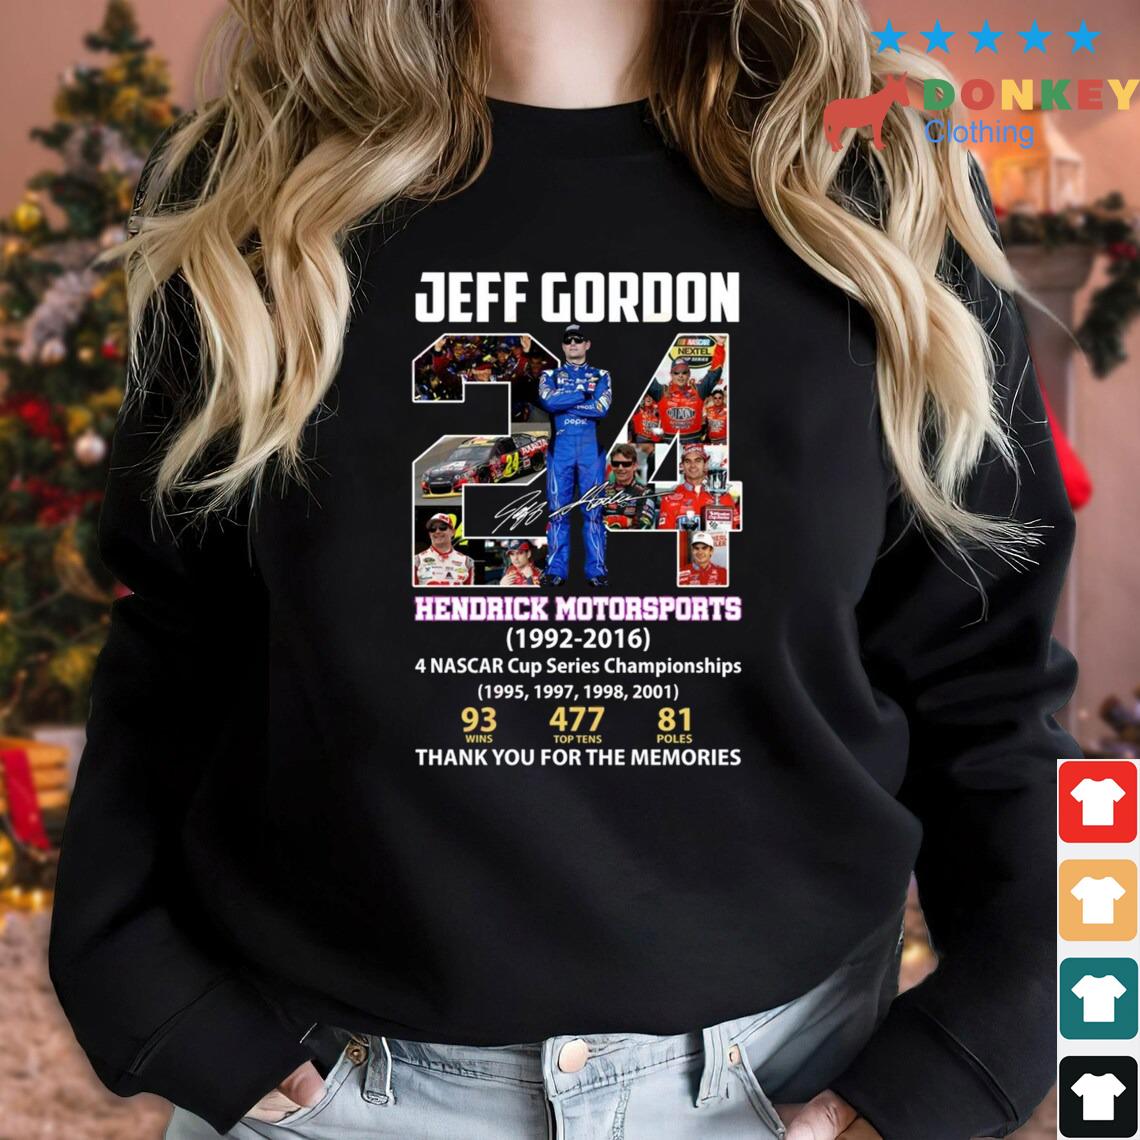 Jeff Gordon Hendrick Motorsports 1992 – 2016 Thank You For The Memories Signatures Shirt